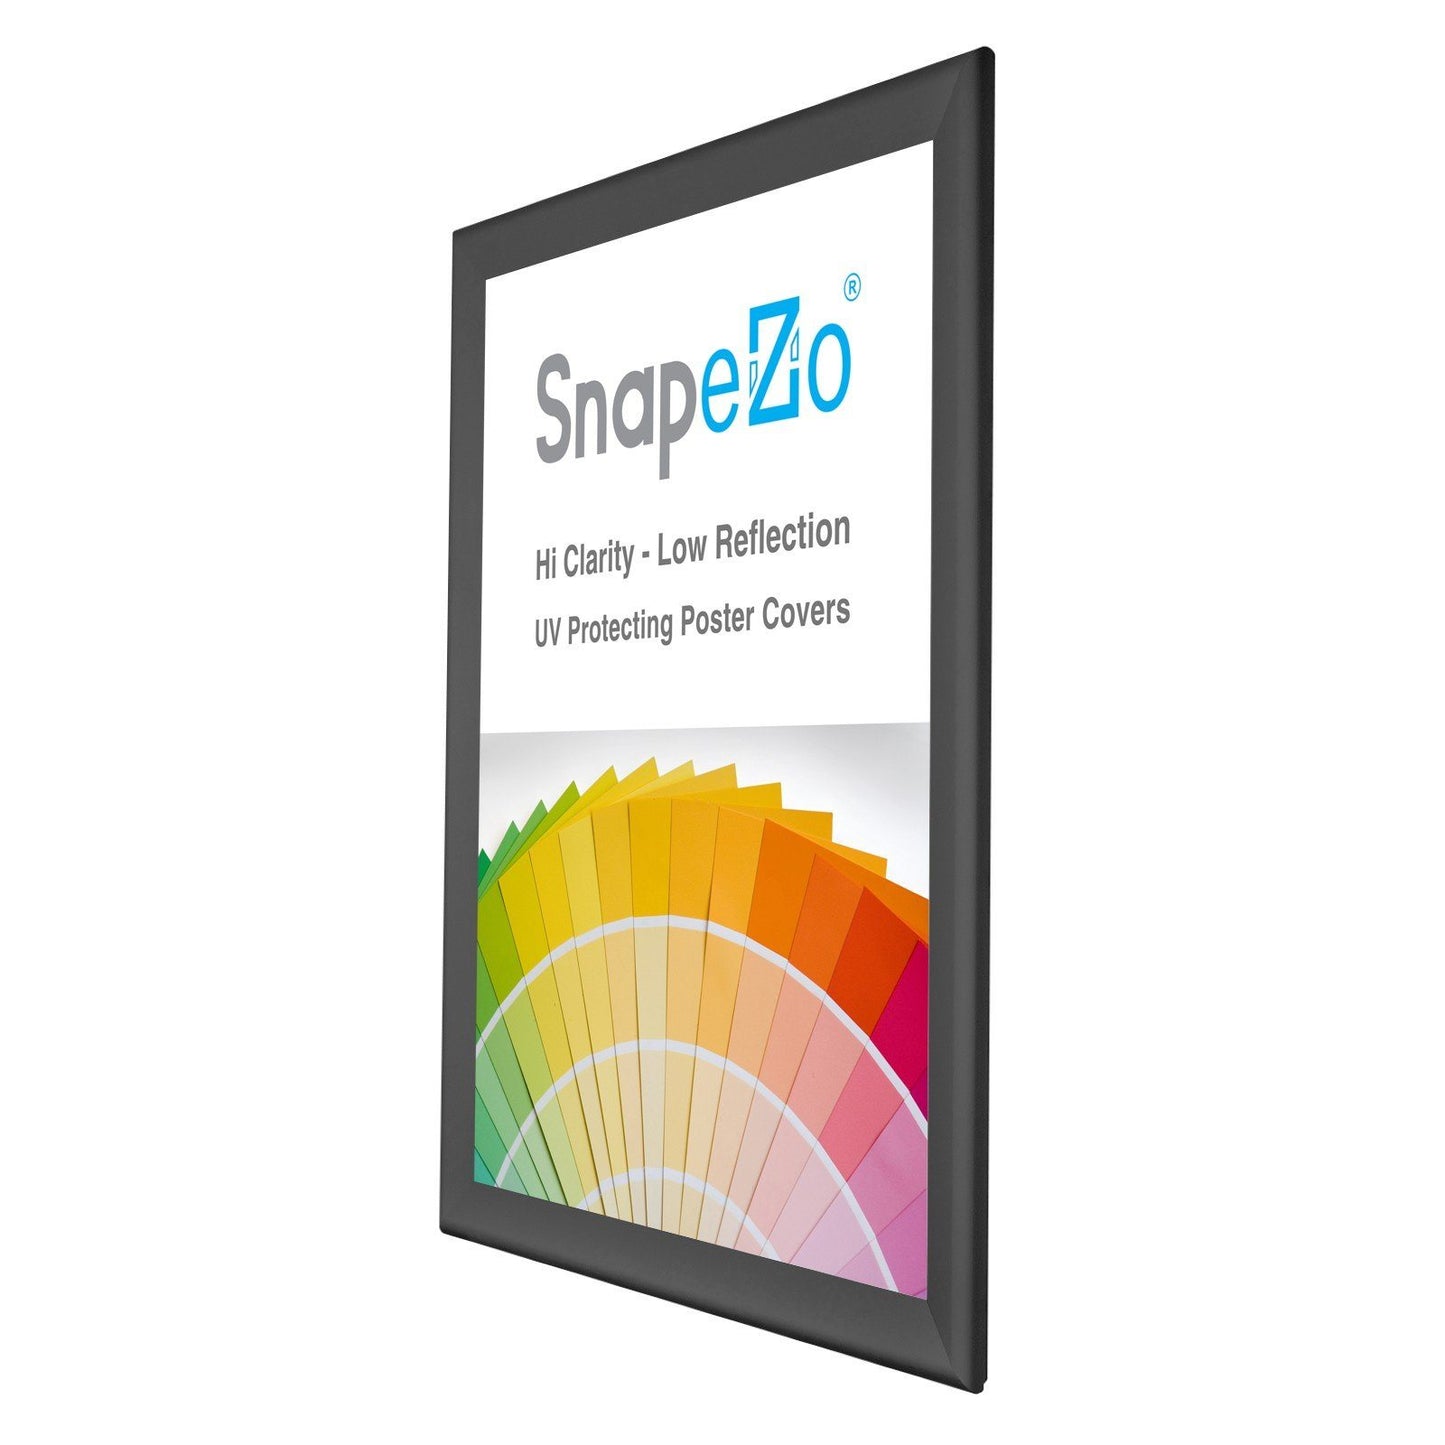 36x48 Black SnapeZo® Snap Frame - 1.7" Profile